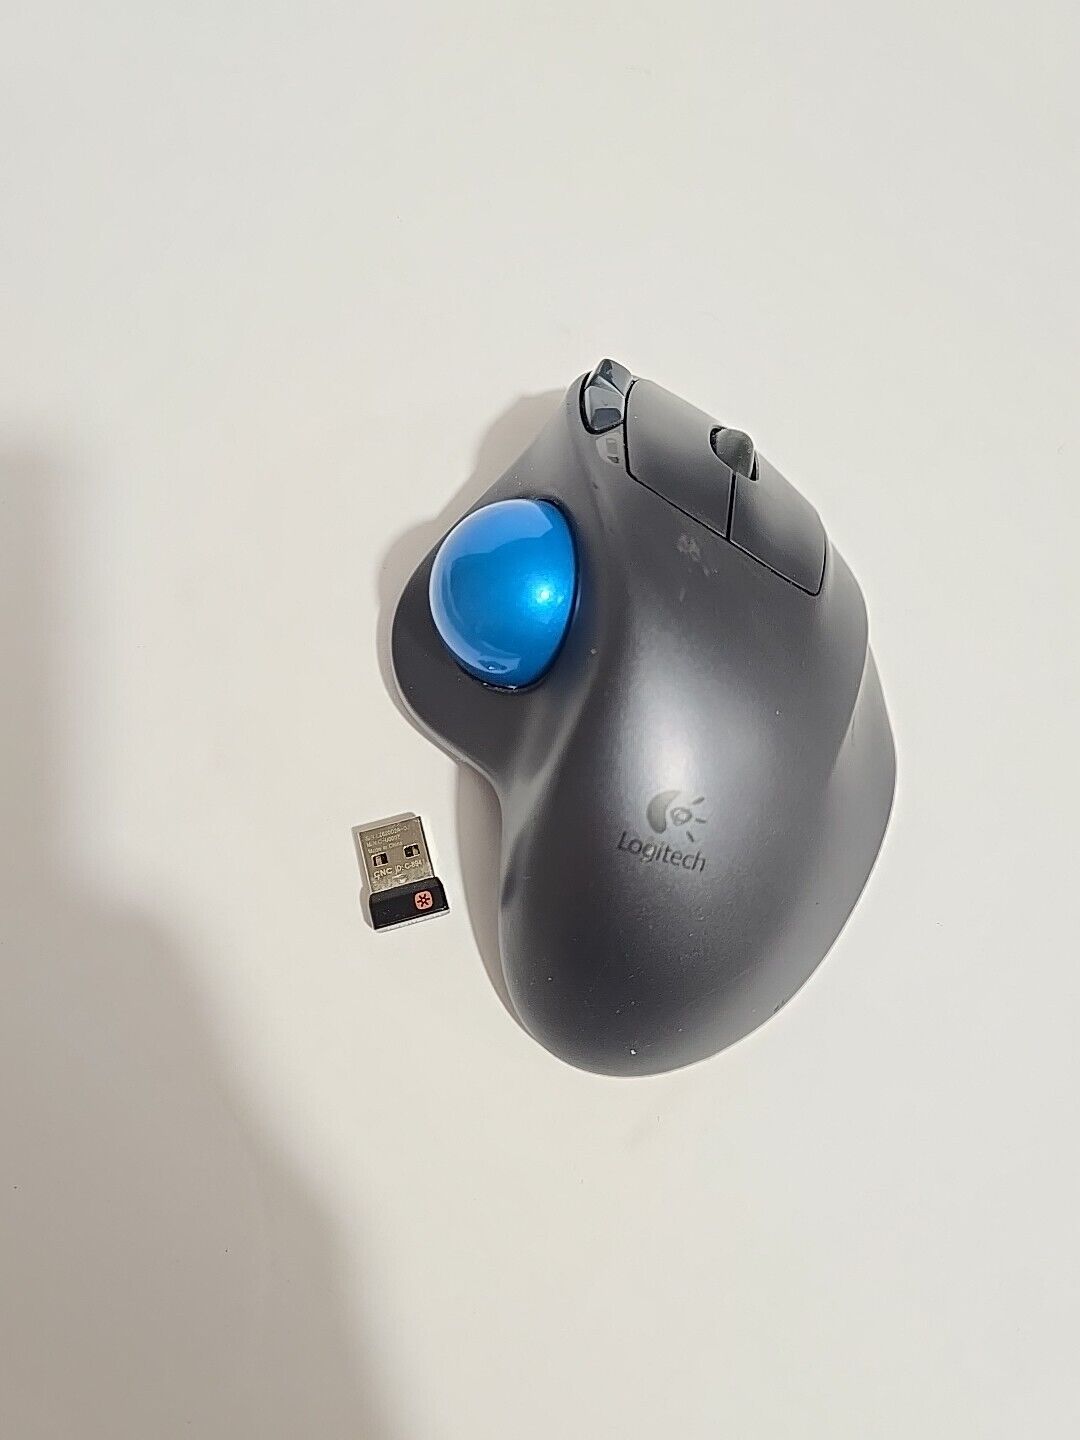 Logitech M570 Wireless Trackball Mouse Ergonomic Model T-R0001 With dongle